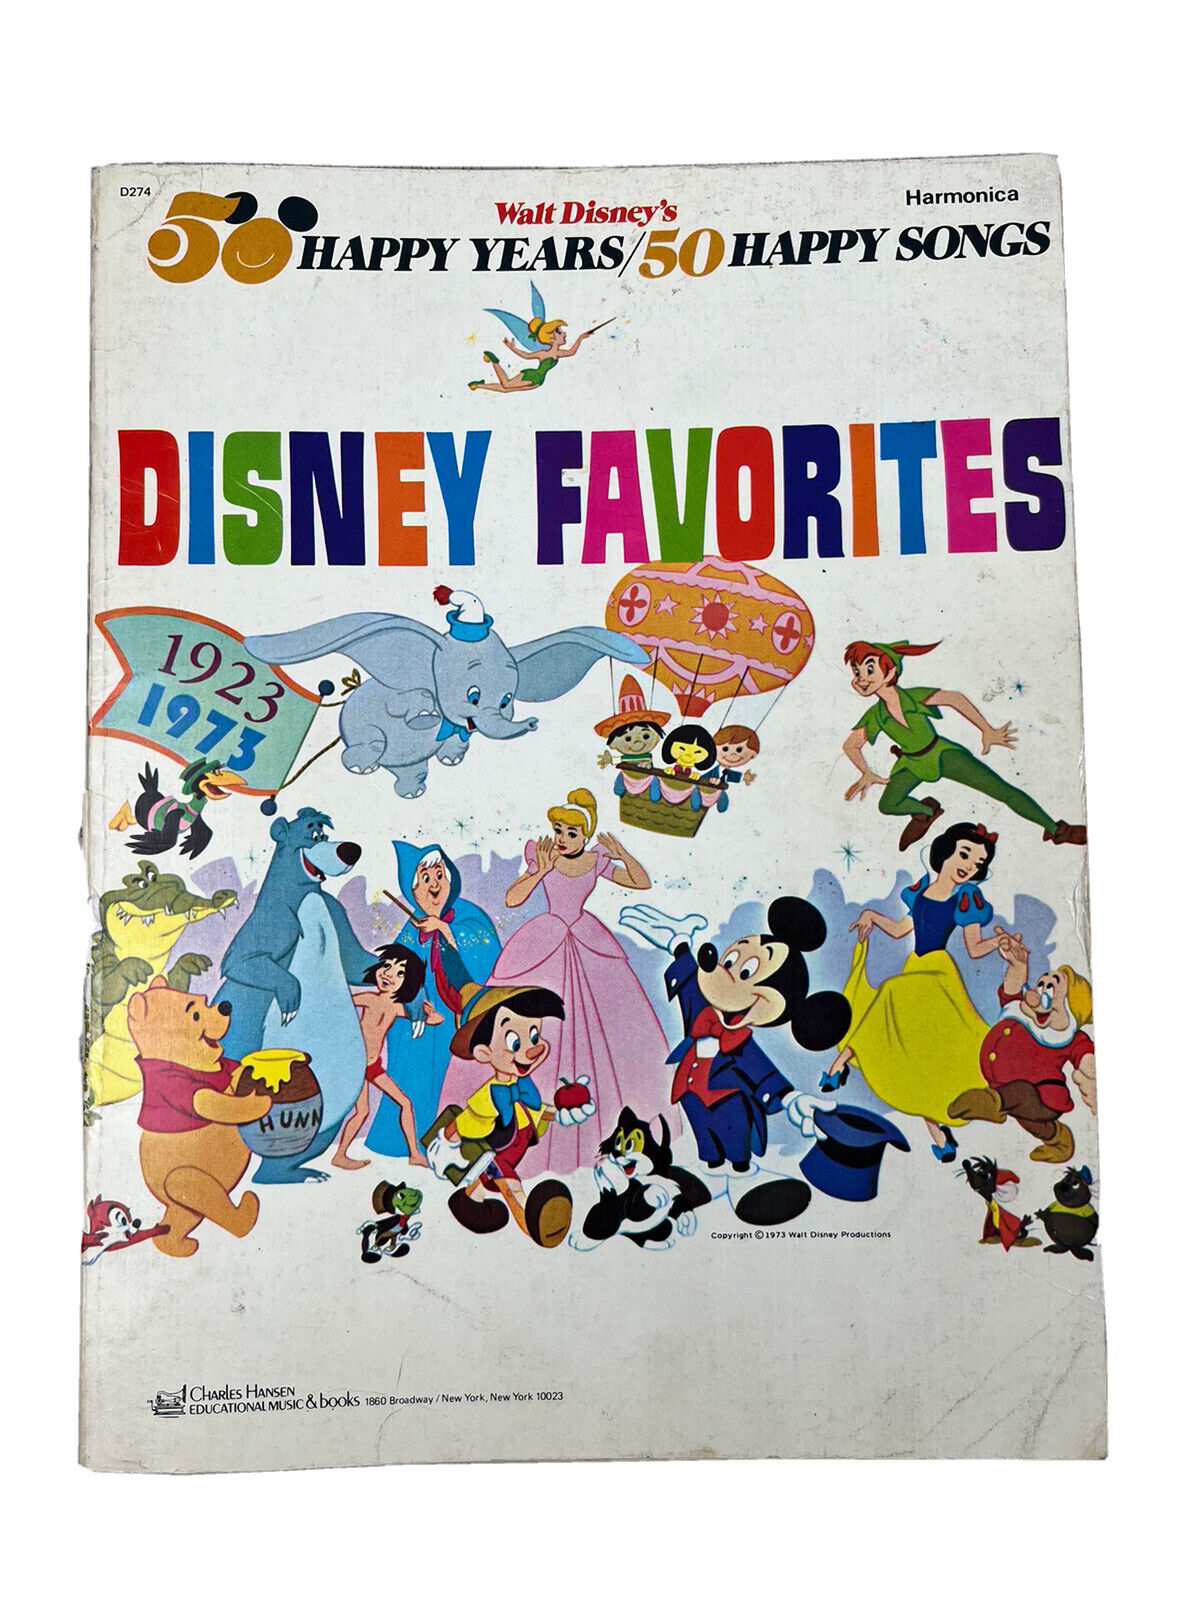 Walt Disney Harmonica Song Book 50 Years Anniversary Disney Favorites 1973 VTG